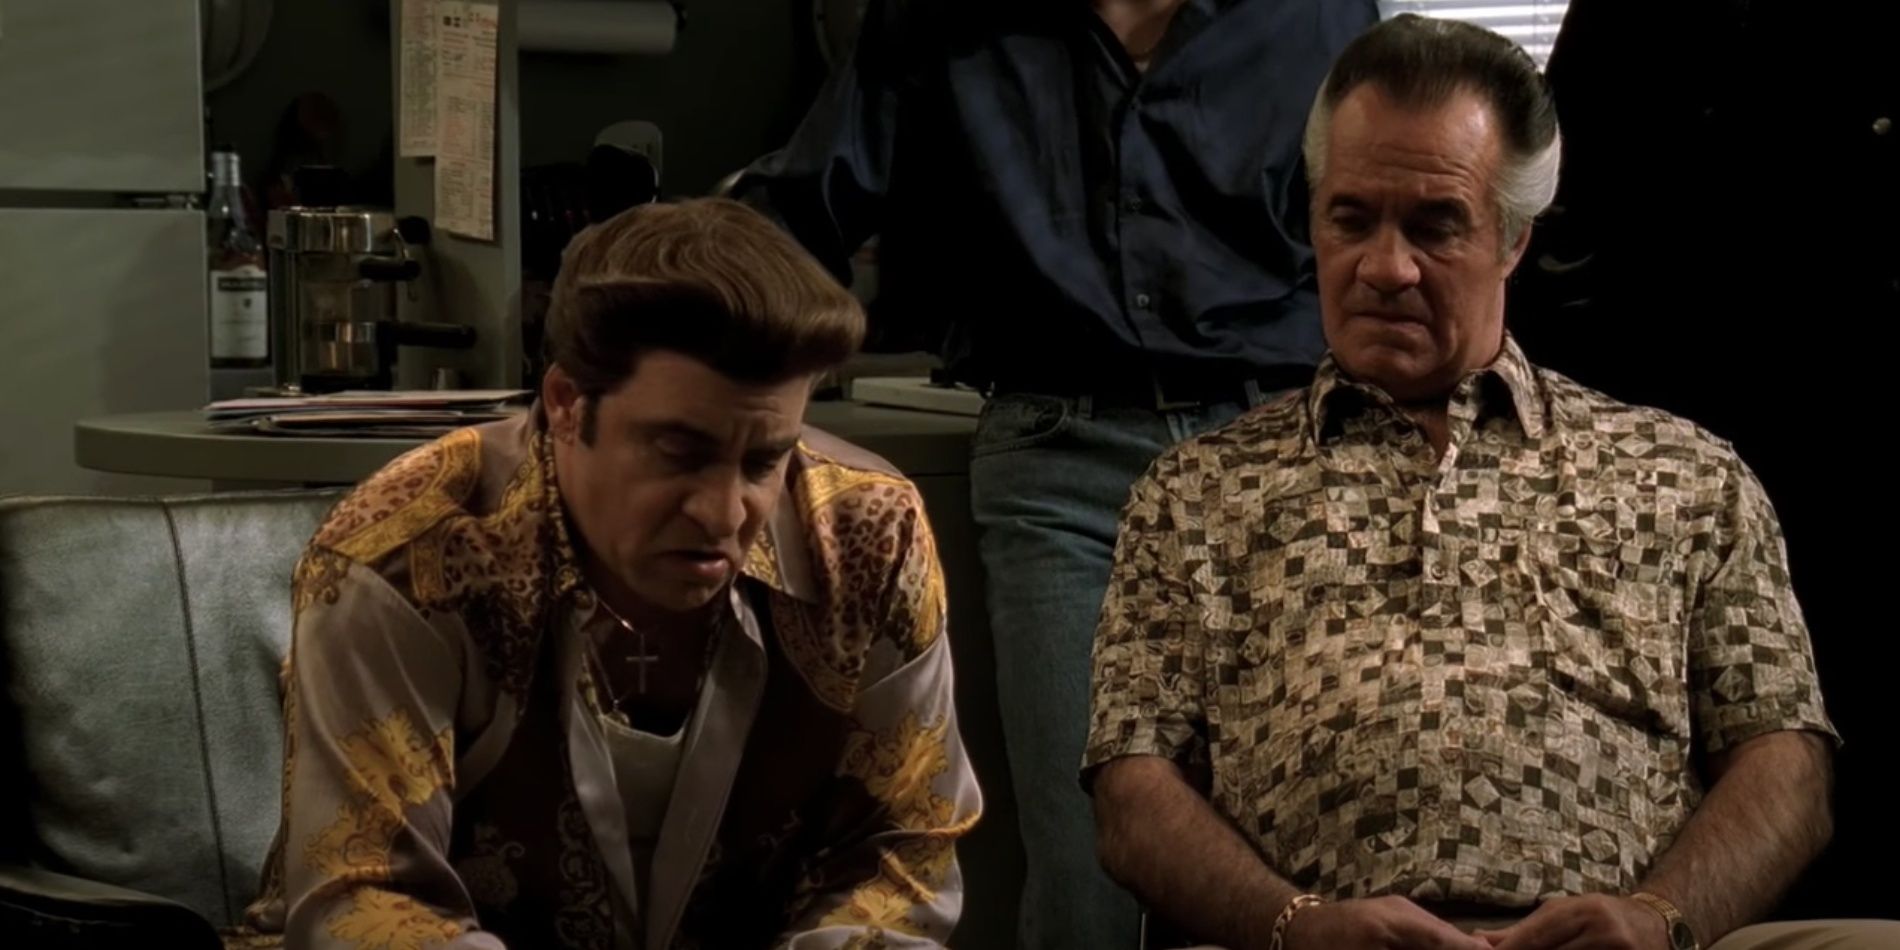 The Sopranos: The 5 Funniest Episodes (& The 5 Most Disturbing) | Movie